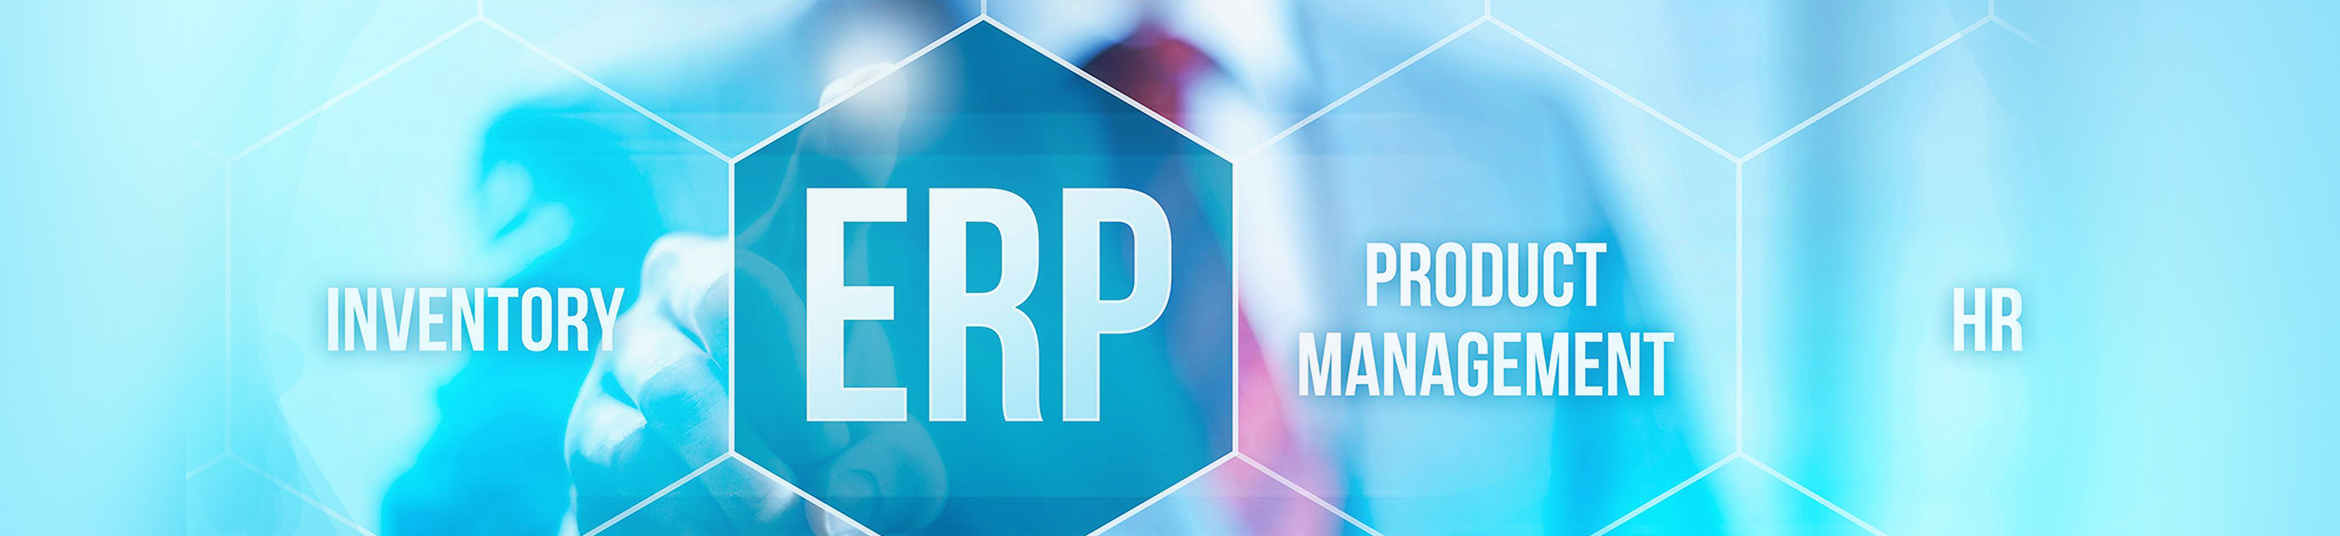 erp enterprise resource planning solution Enterprise resource planning (ERP)